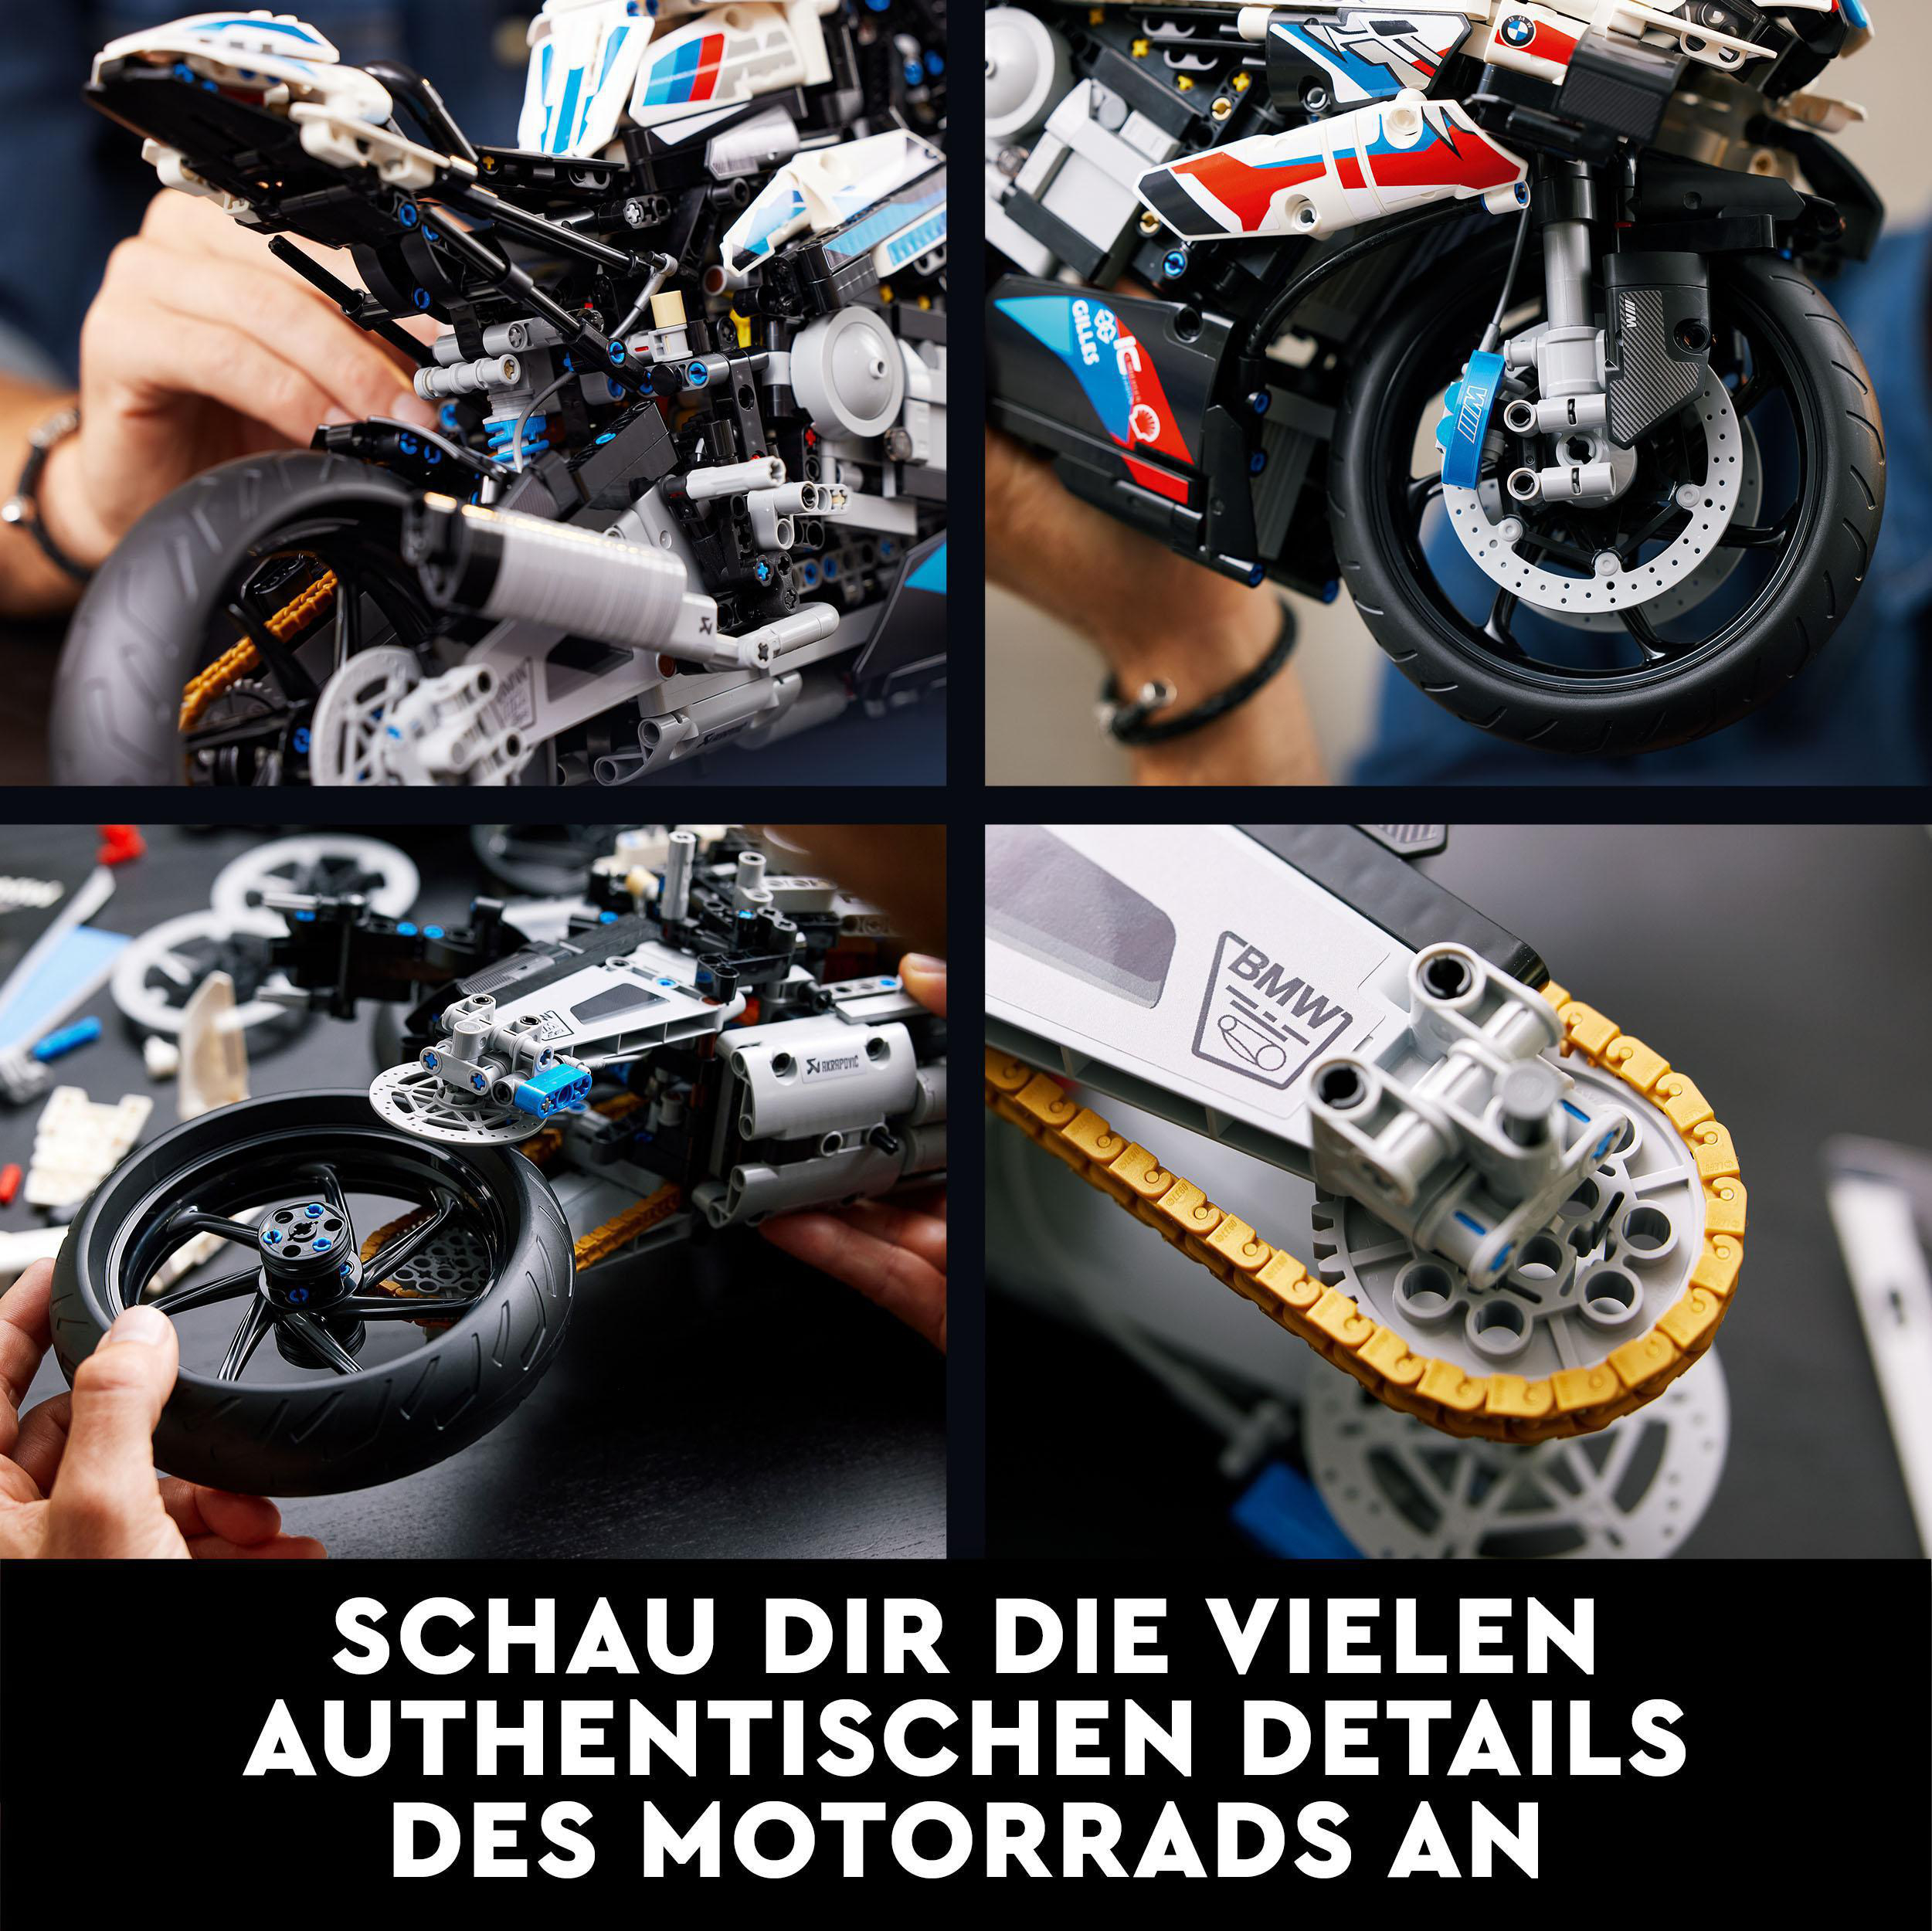 RR BMW 42130 M Mehrfarbig Bausatz, 1000 Technic LEGO